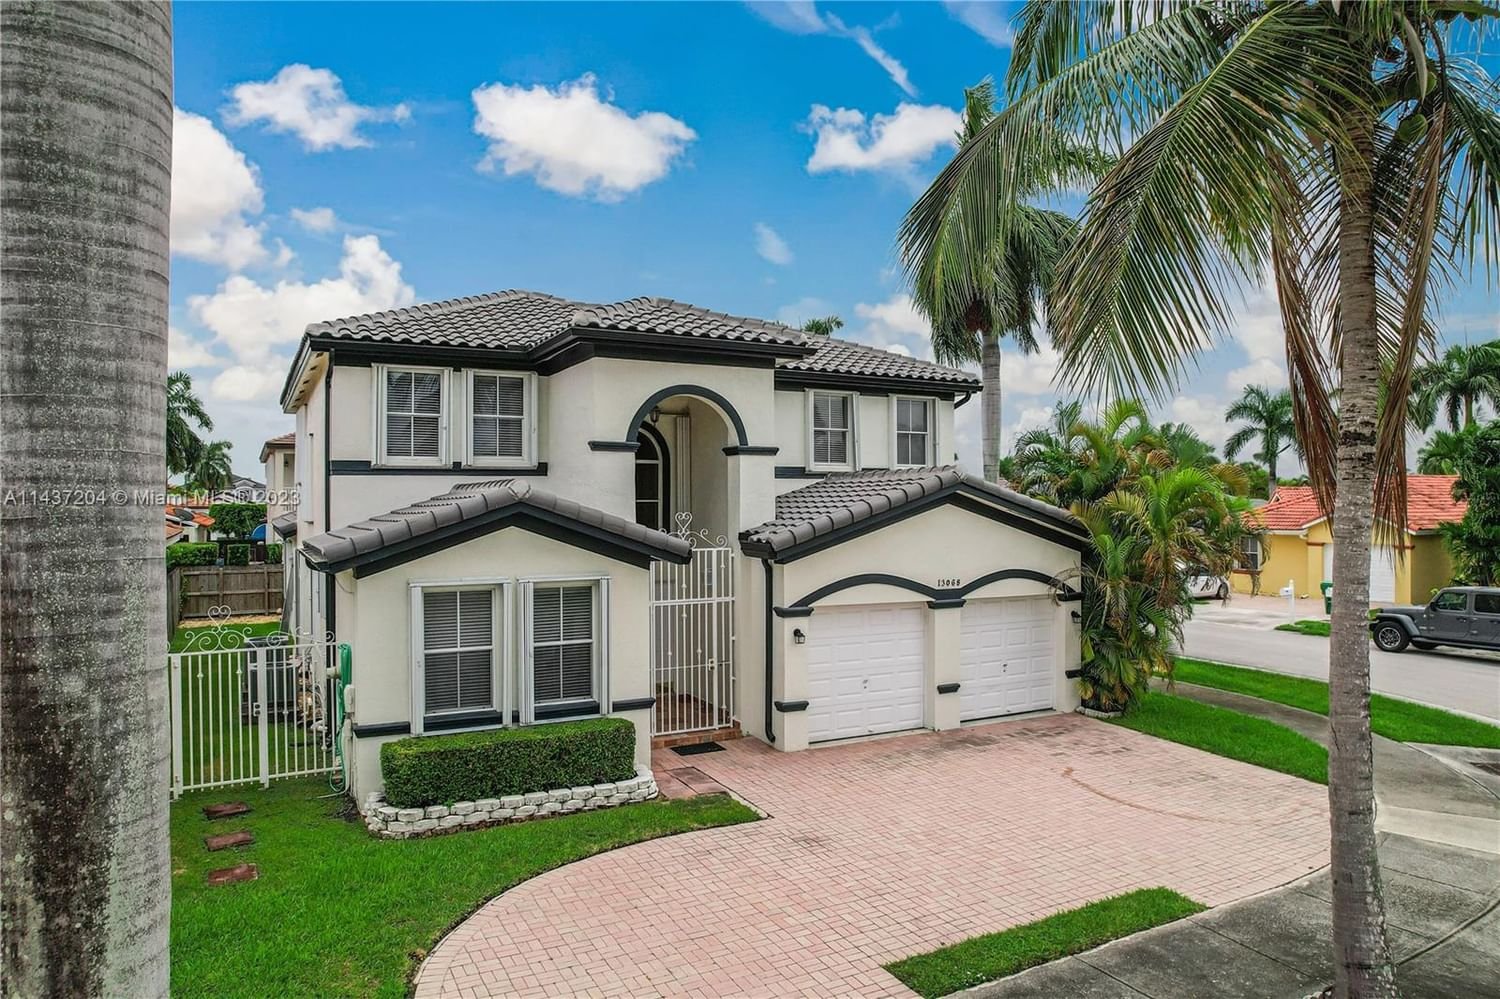 Real estate property located at 13068 9th Ter, Miami-Dade County, Miami, FL